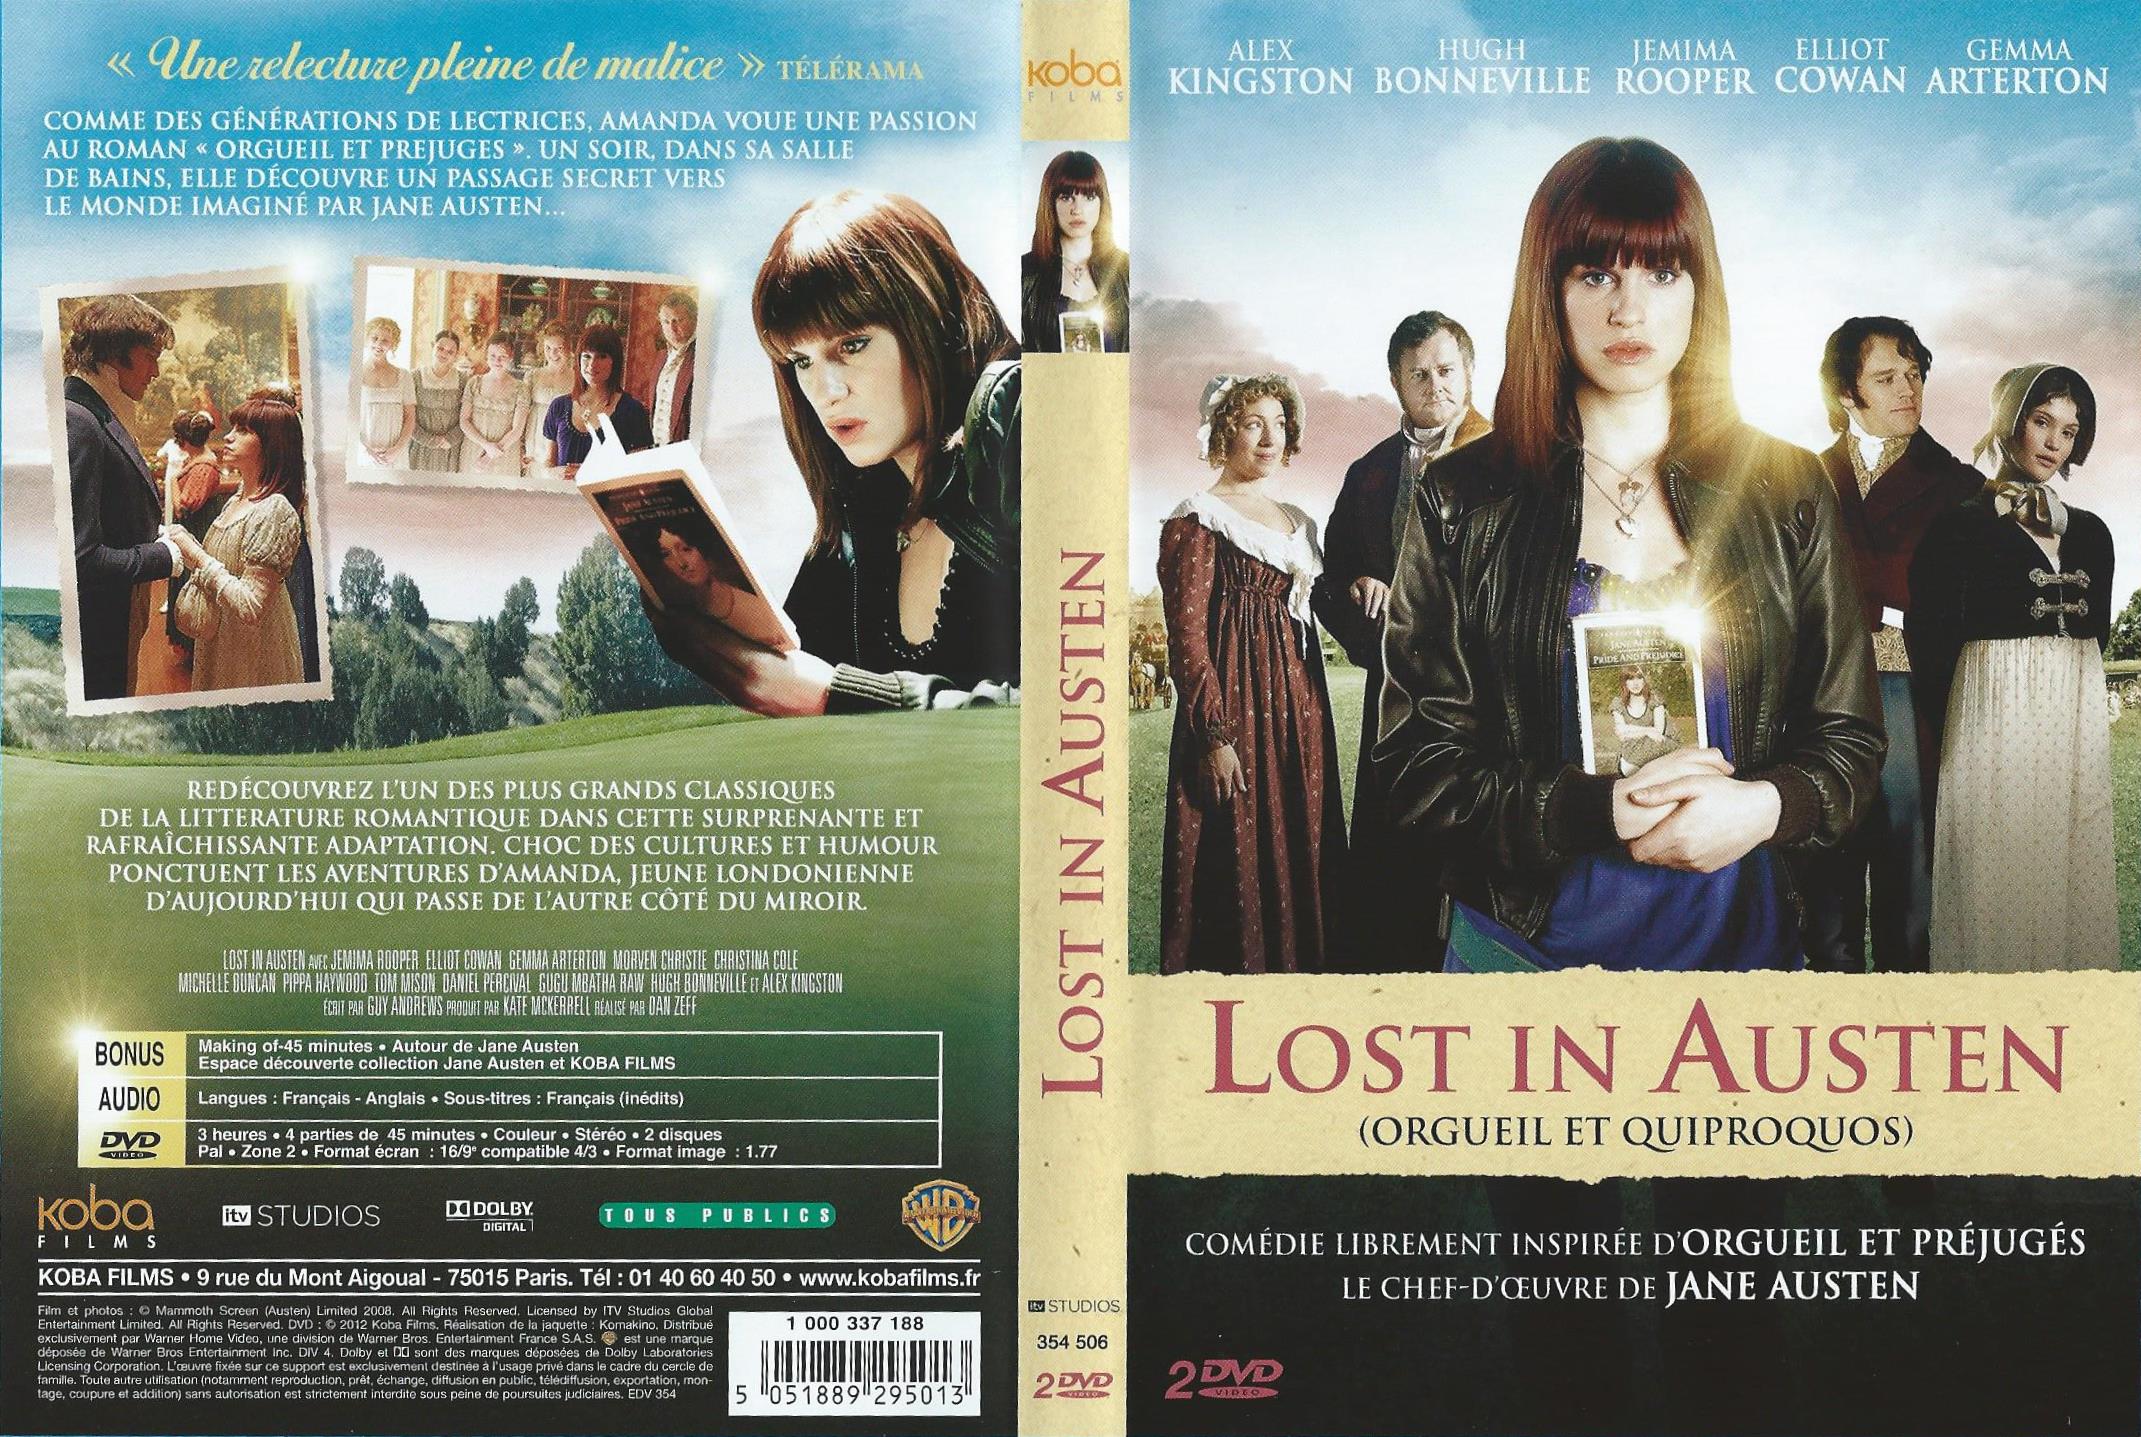 Jaquette DVD Lost in Austen